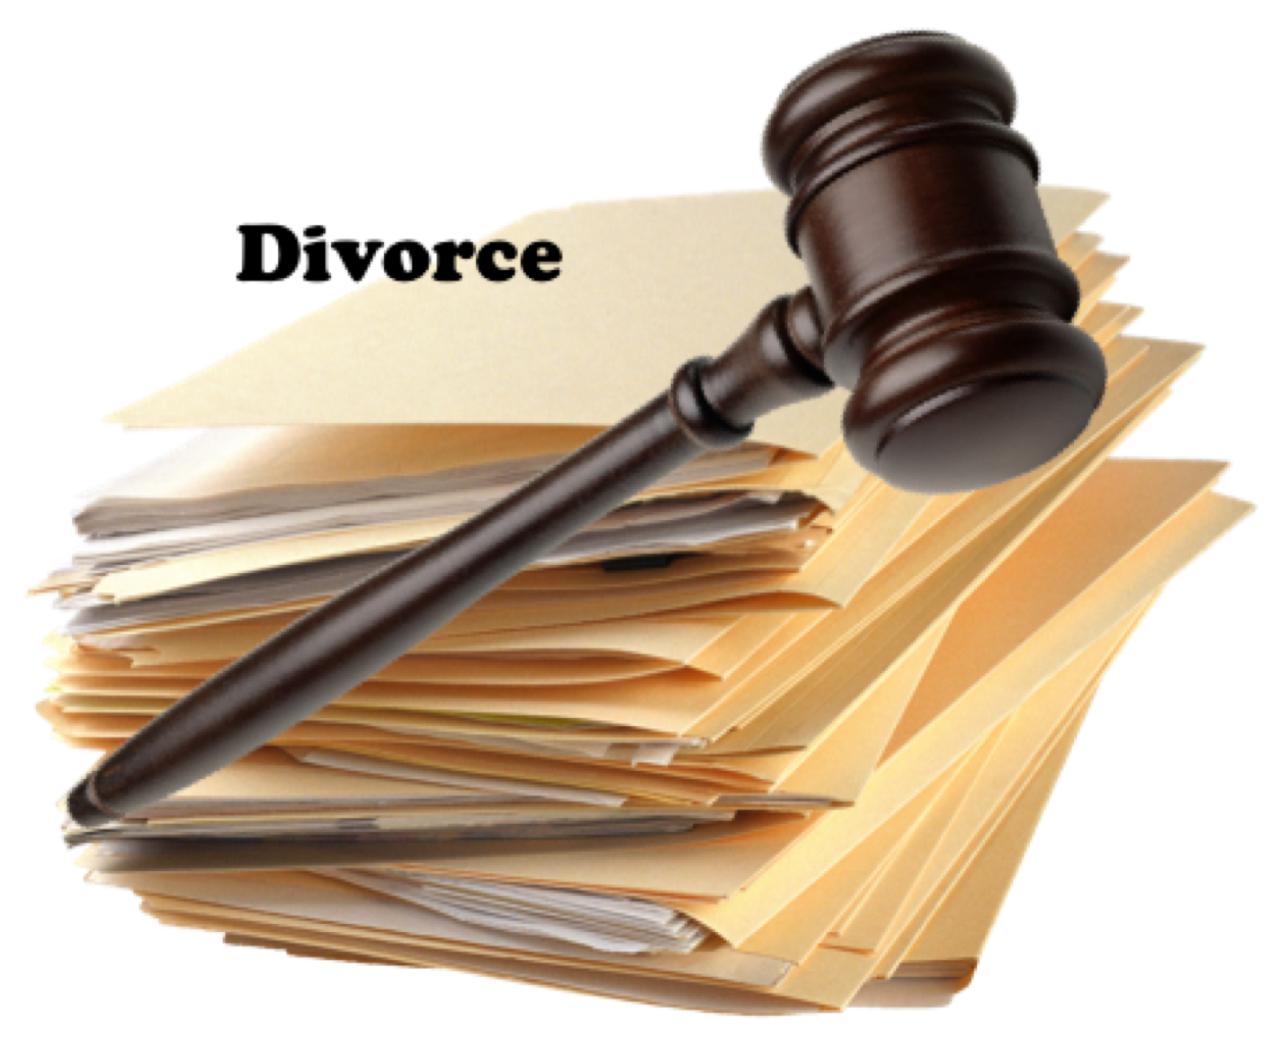 Divorce fees collaborative fixed florida faq quote so do